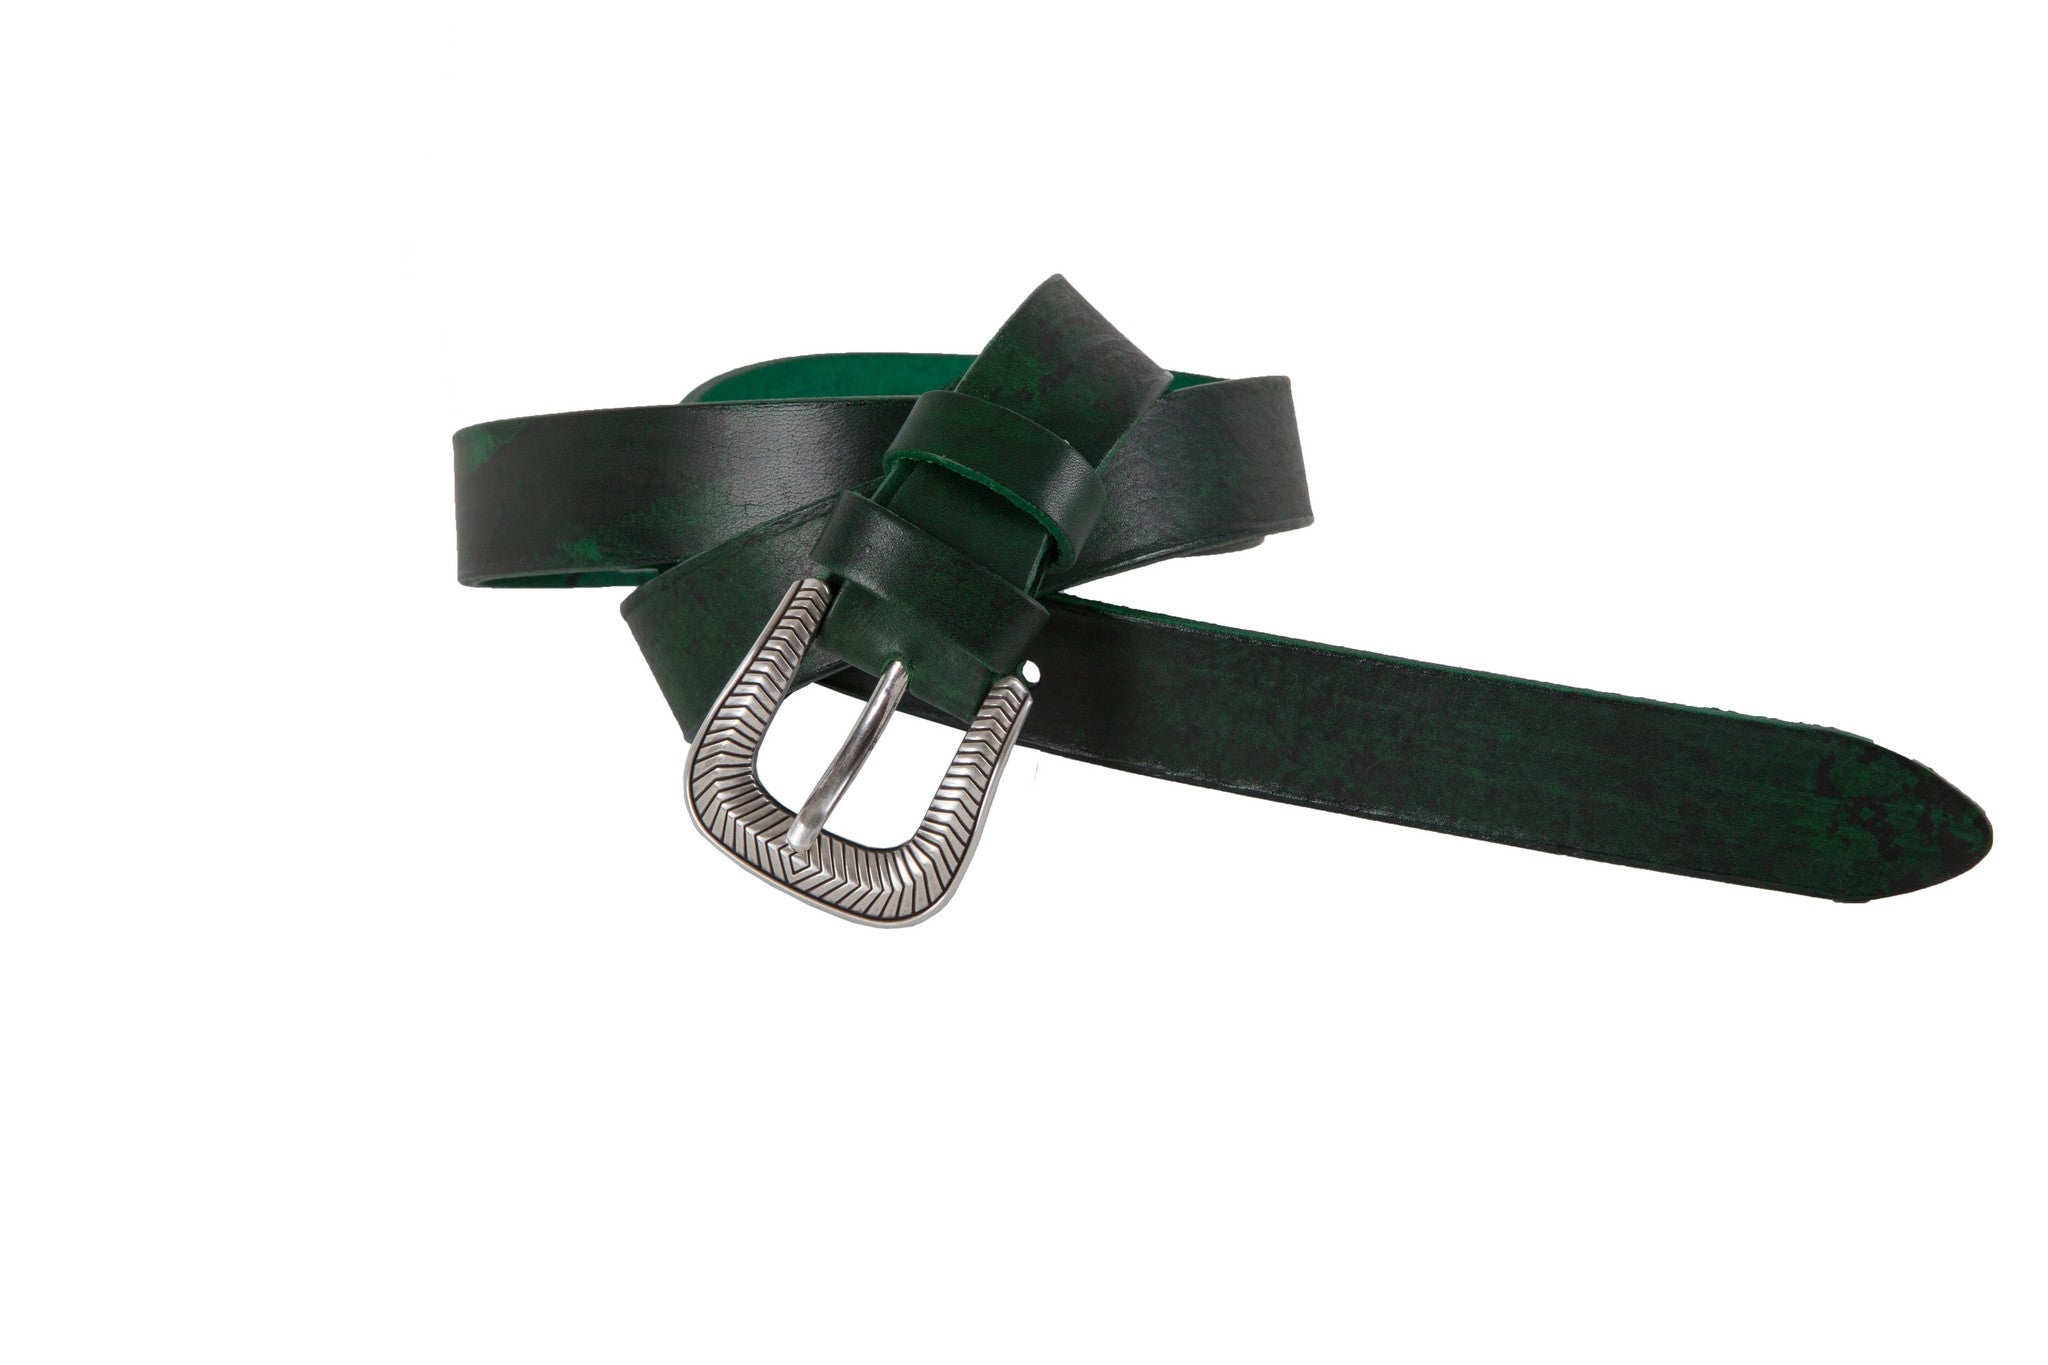 WW403/25 Premium belt in antique Black&Green leather